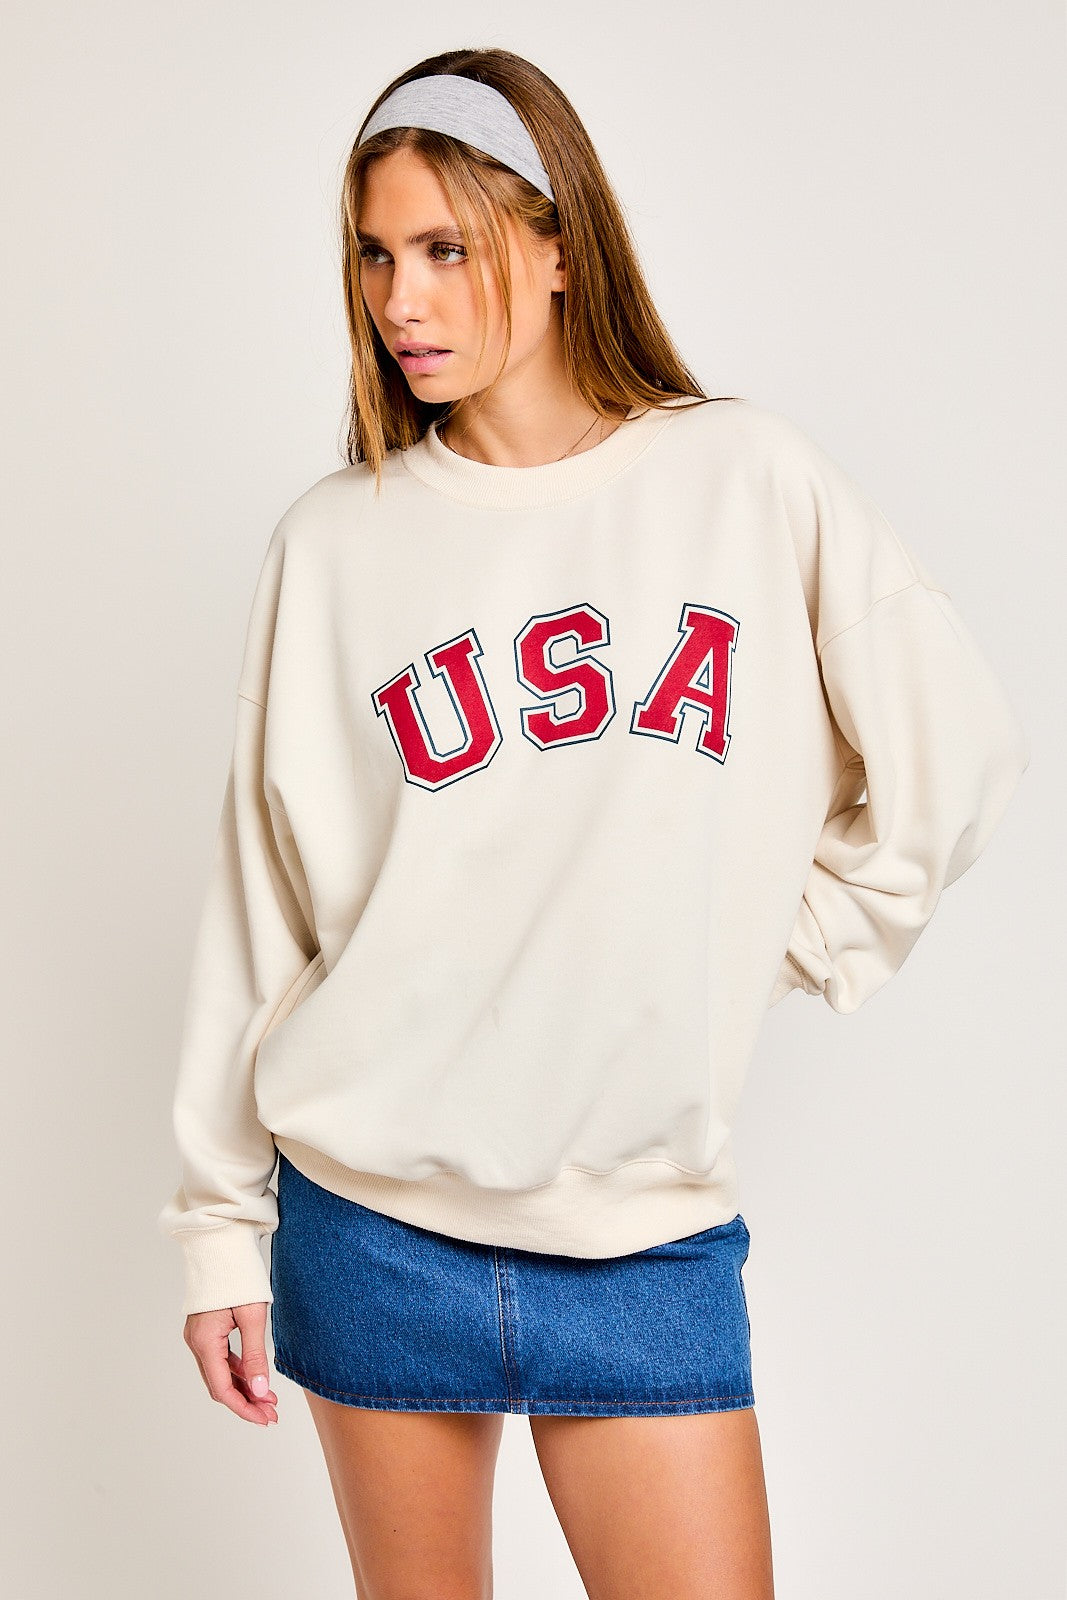 USA Americana Graphic Crewneck Pullover - Ivory Multi